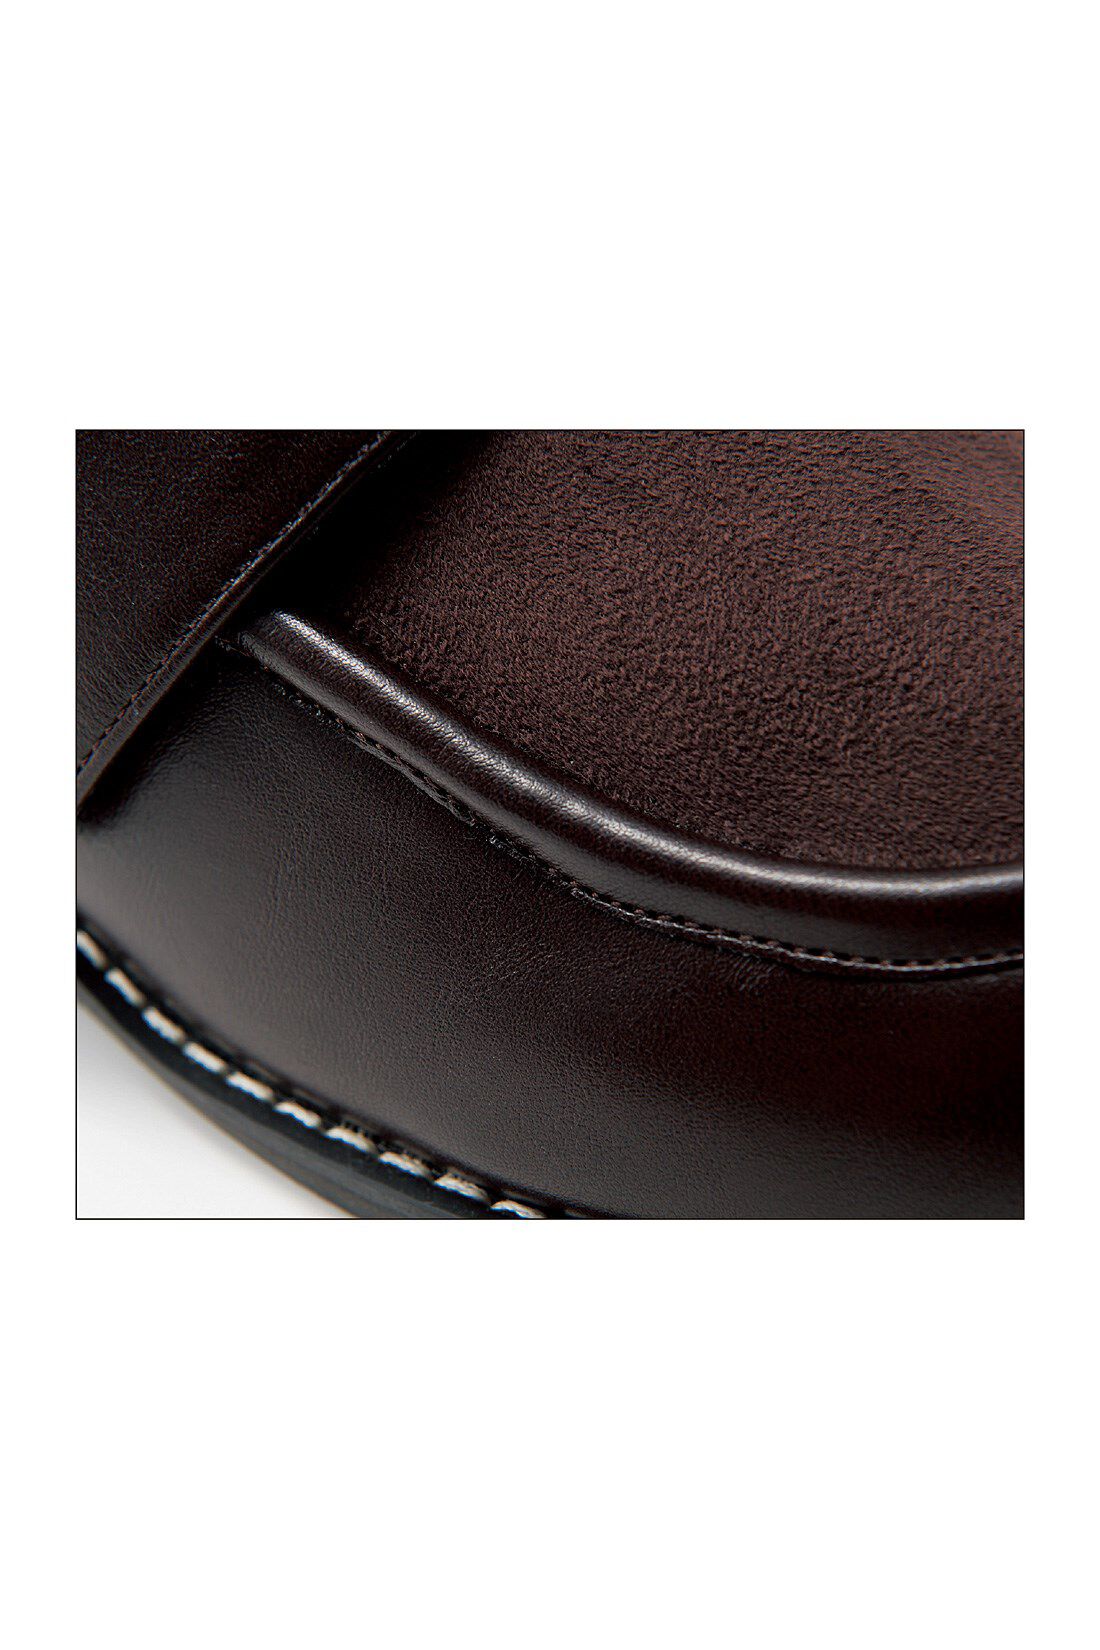 Live in  comfort|リブ イン コンフォート　面ファスナー仕様で　甲高幅広さんもうれしい！　足まわりゆったりオブリークローファー〈ブラック〉|艶のある合皮と同色のエコスエードの異素材遣いで上品な印象。